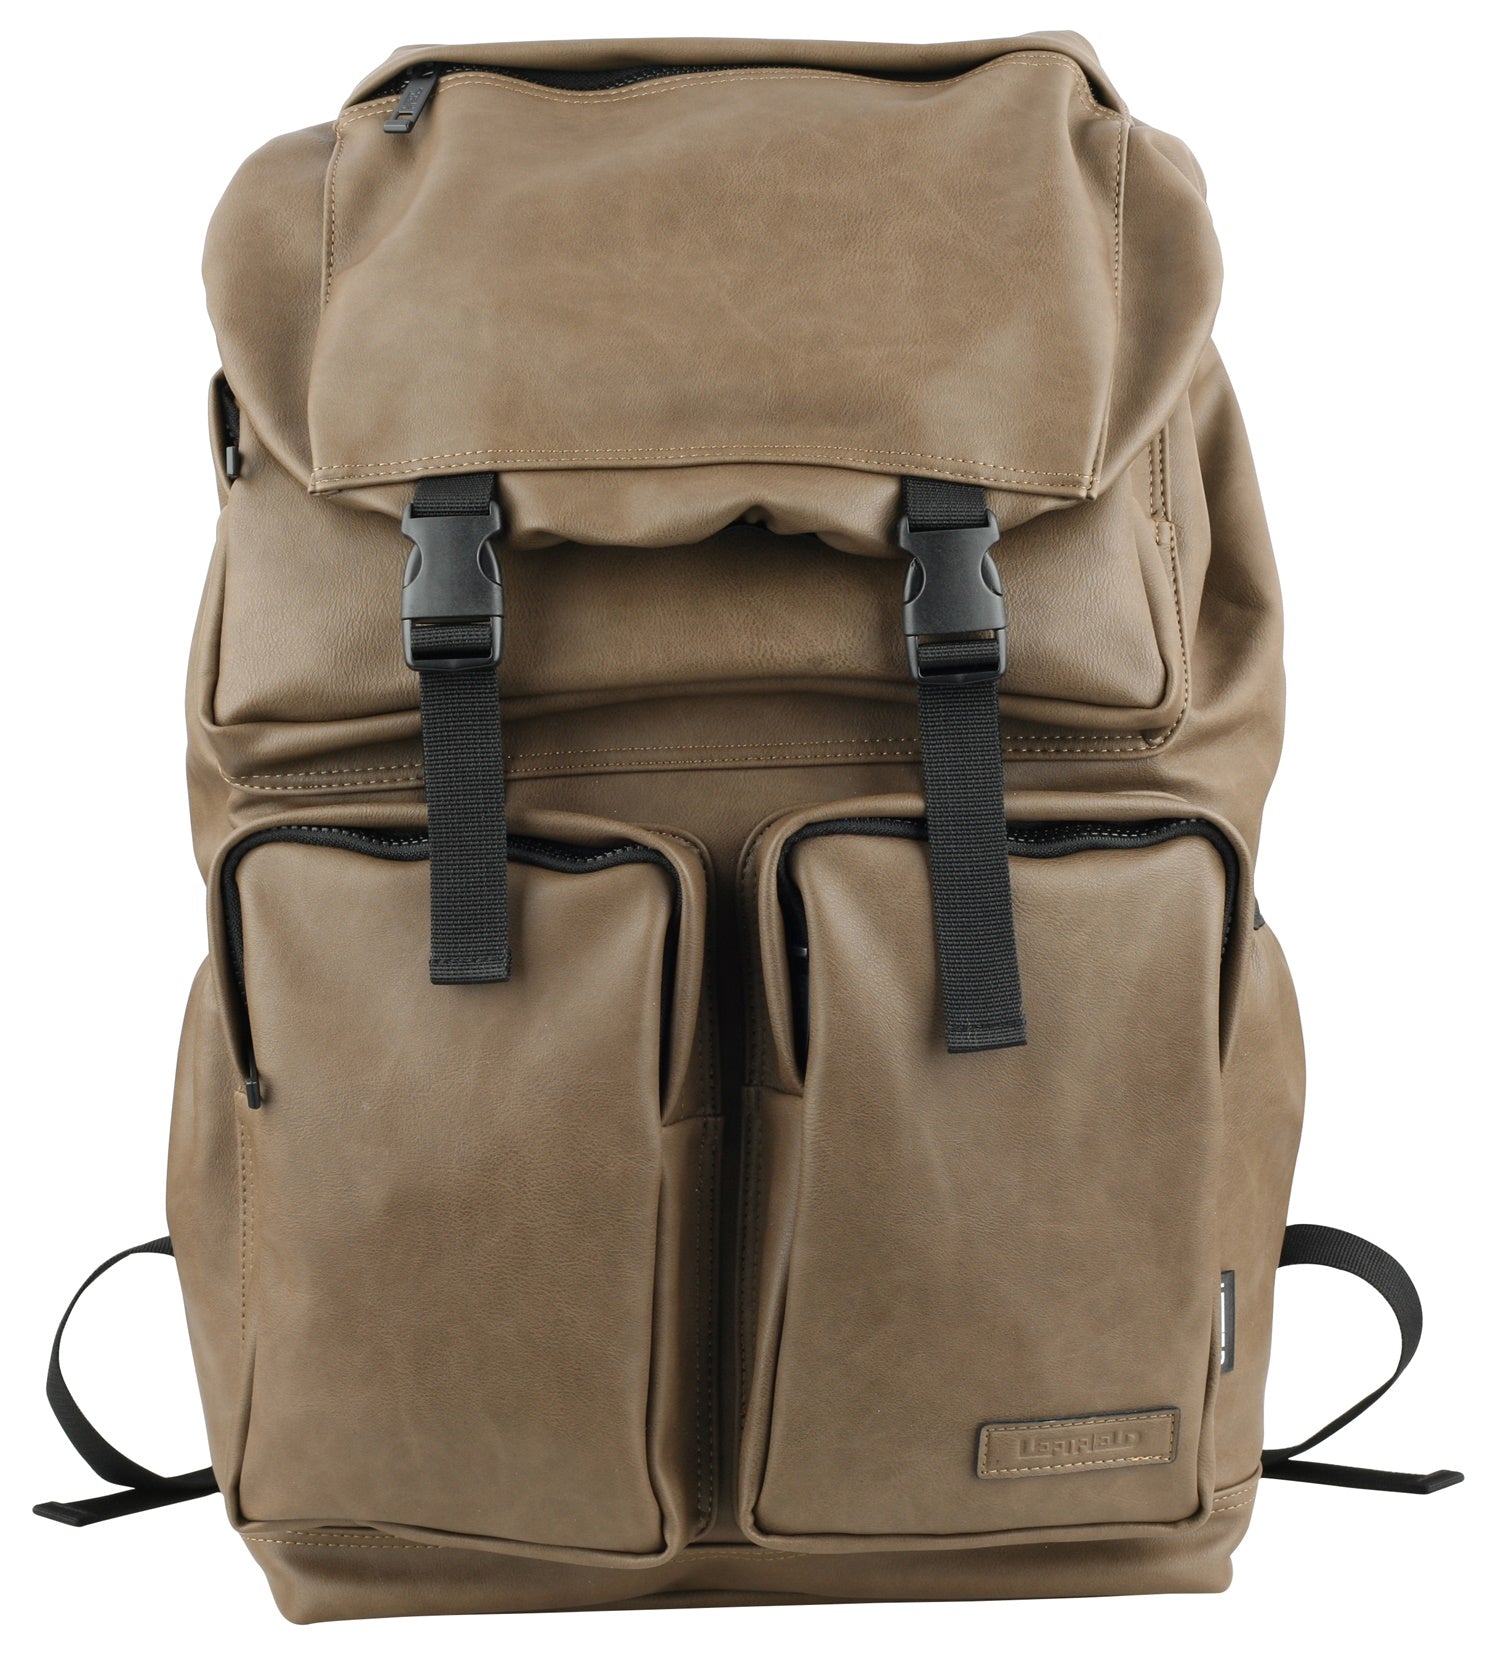 Beige Synthetic Leather Rucksacks Travel Backpacks